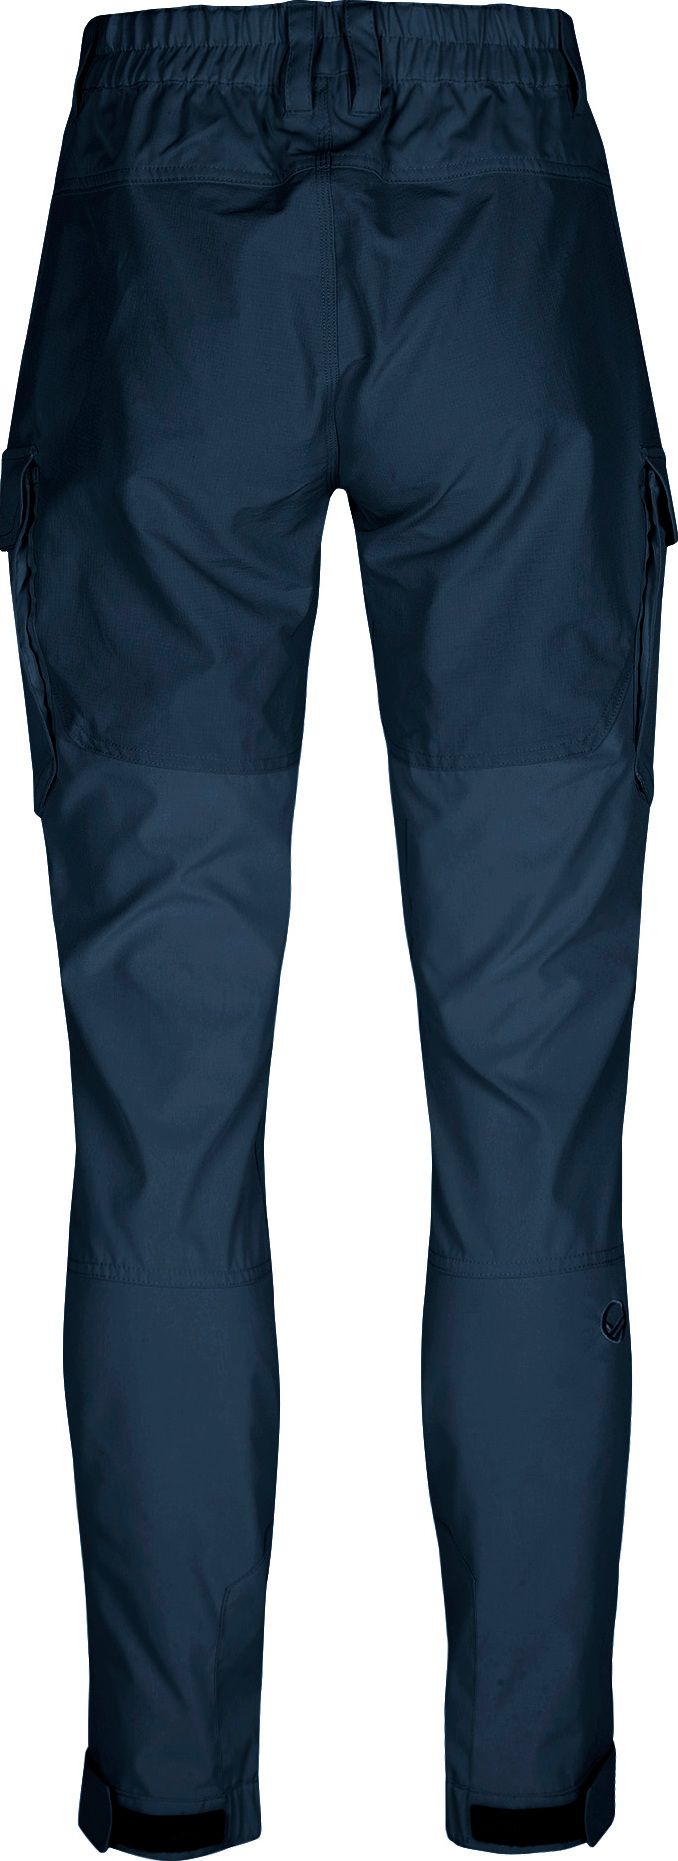 Women's Hiker Lite Pants Dress Blue Halti